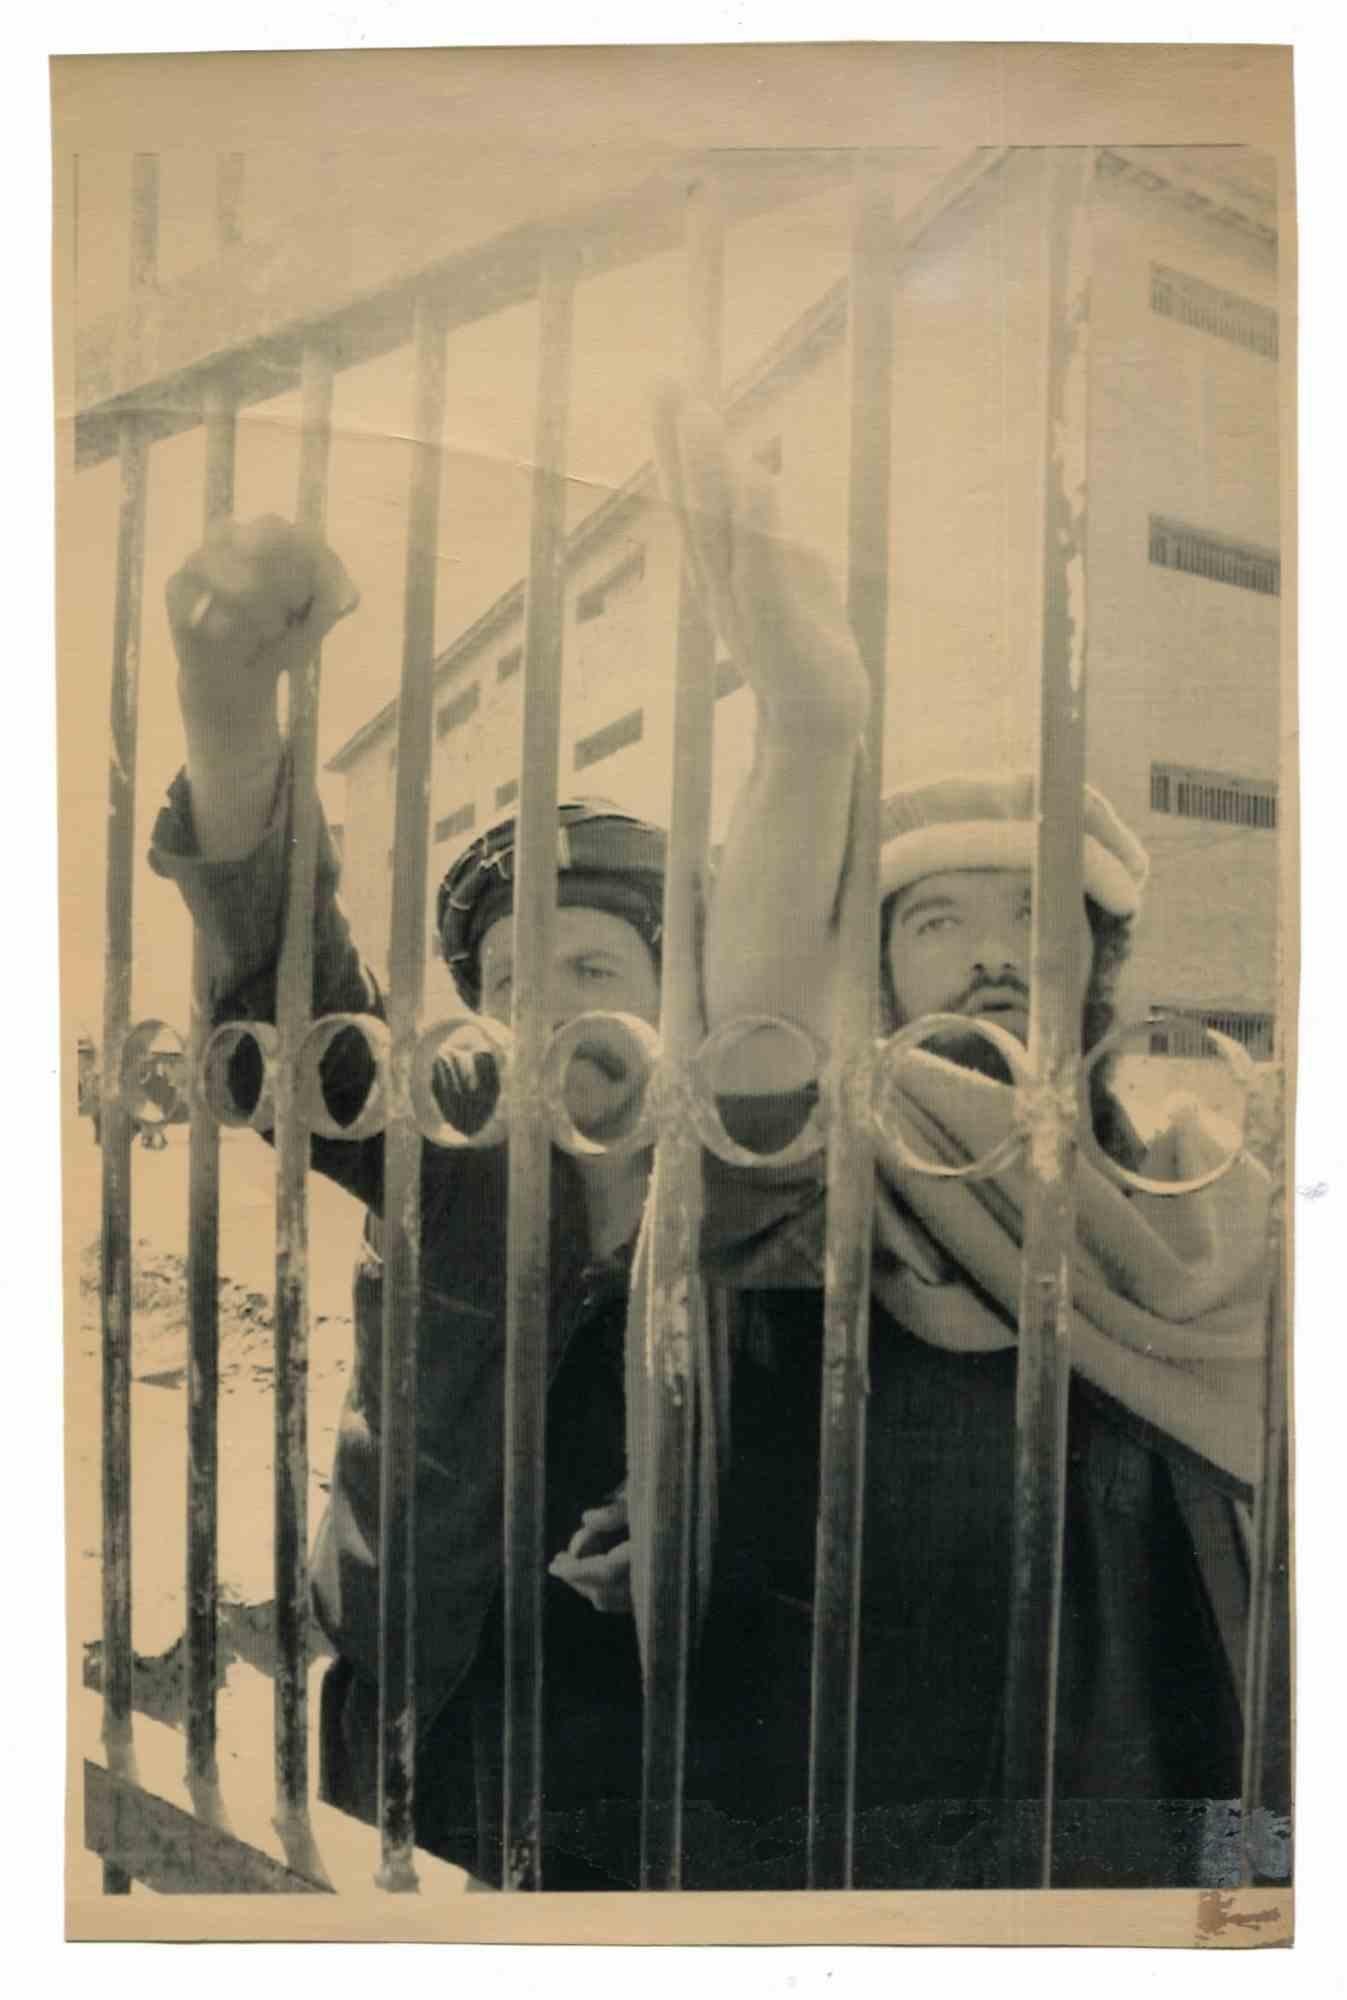 Unknown Figurative Photograph - Revolution in Teheran - Vintage Photo - 1970s